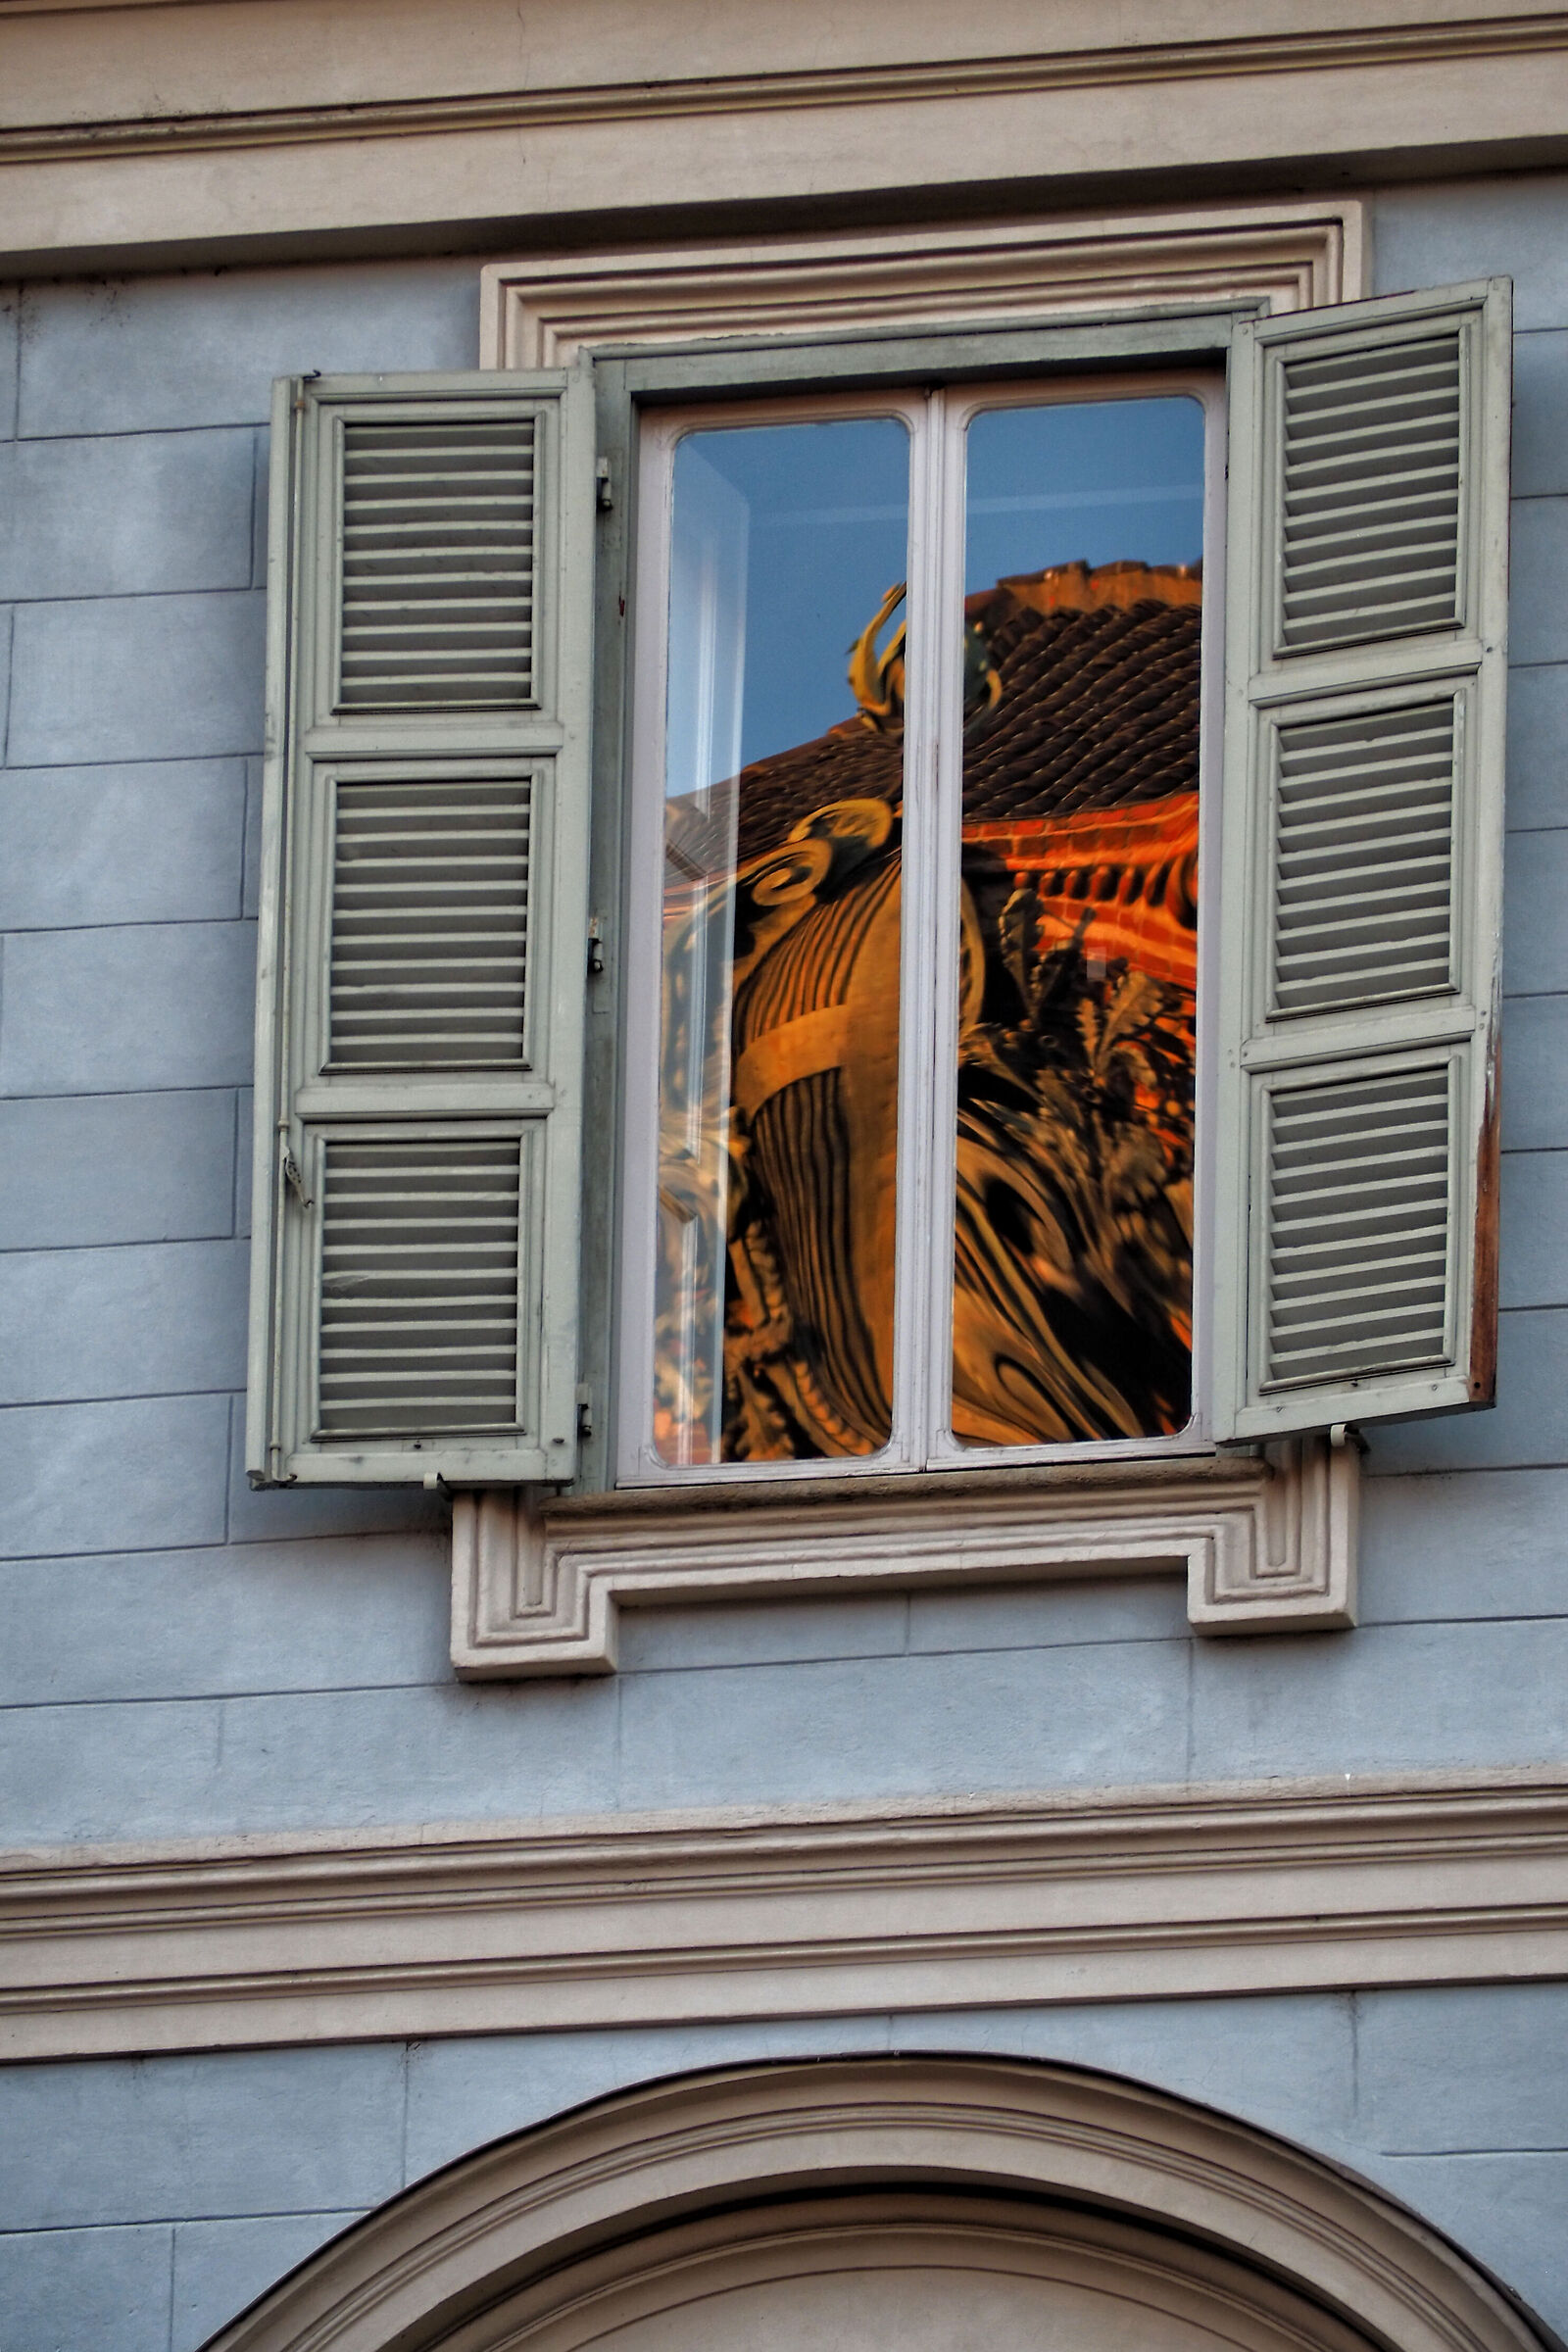 Palazzo Carignano from the window......